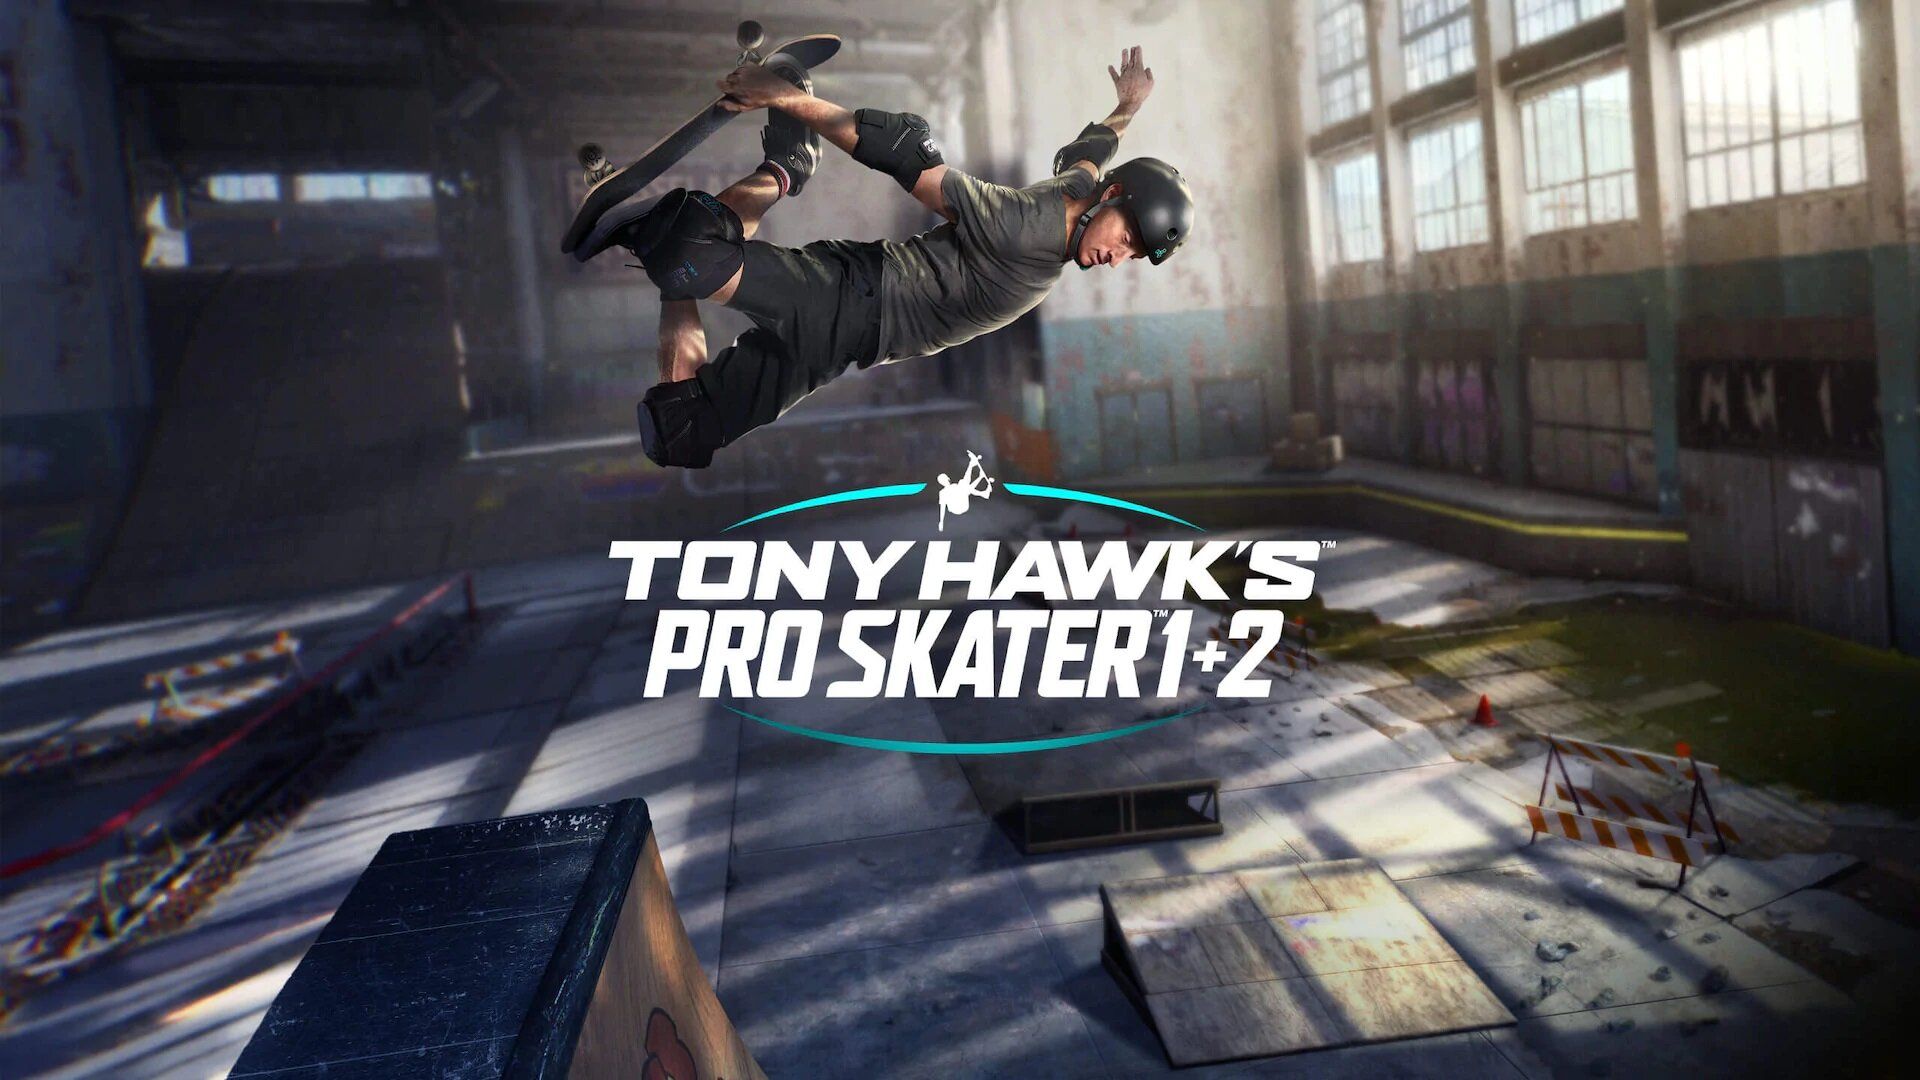 Tony Hawk's Pro Skater 1 + 2 remasters arriving on September 4